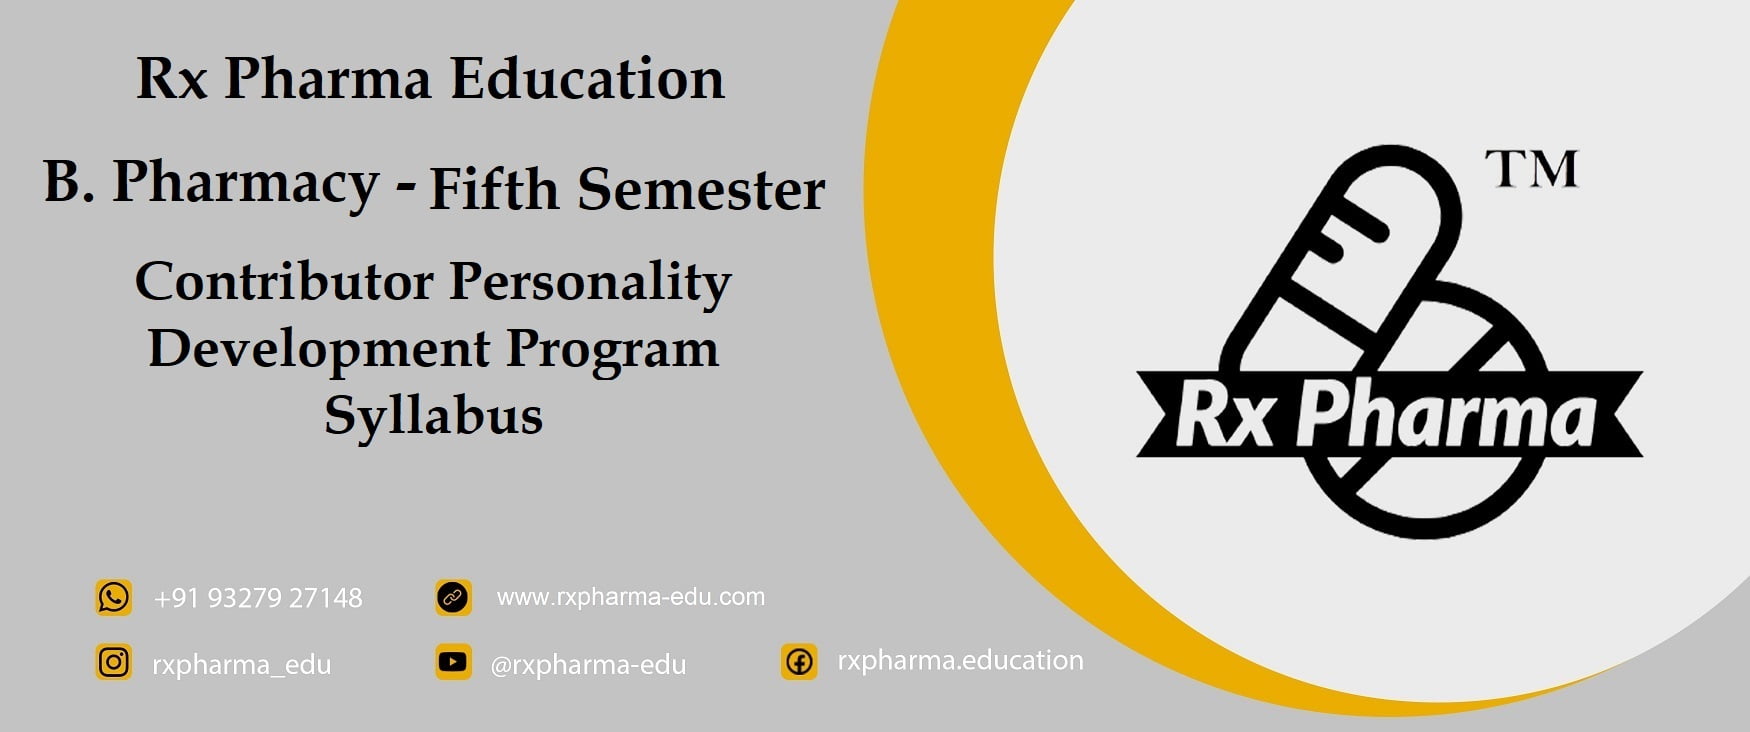 Contributor Personality Development Program Syllabus Banner